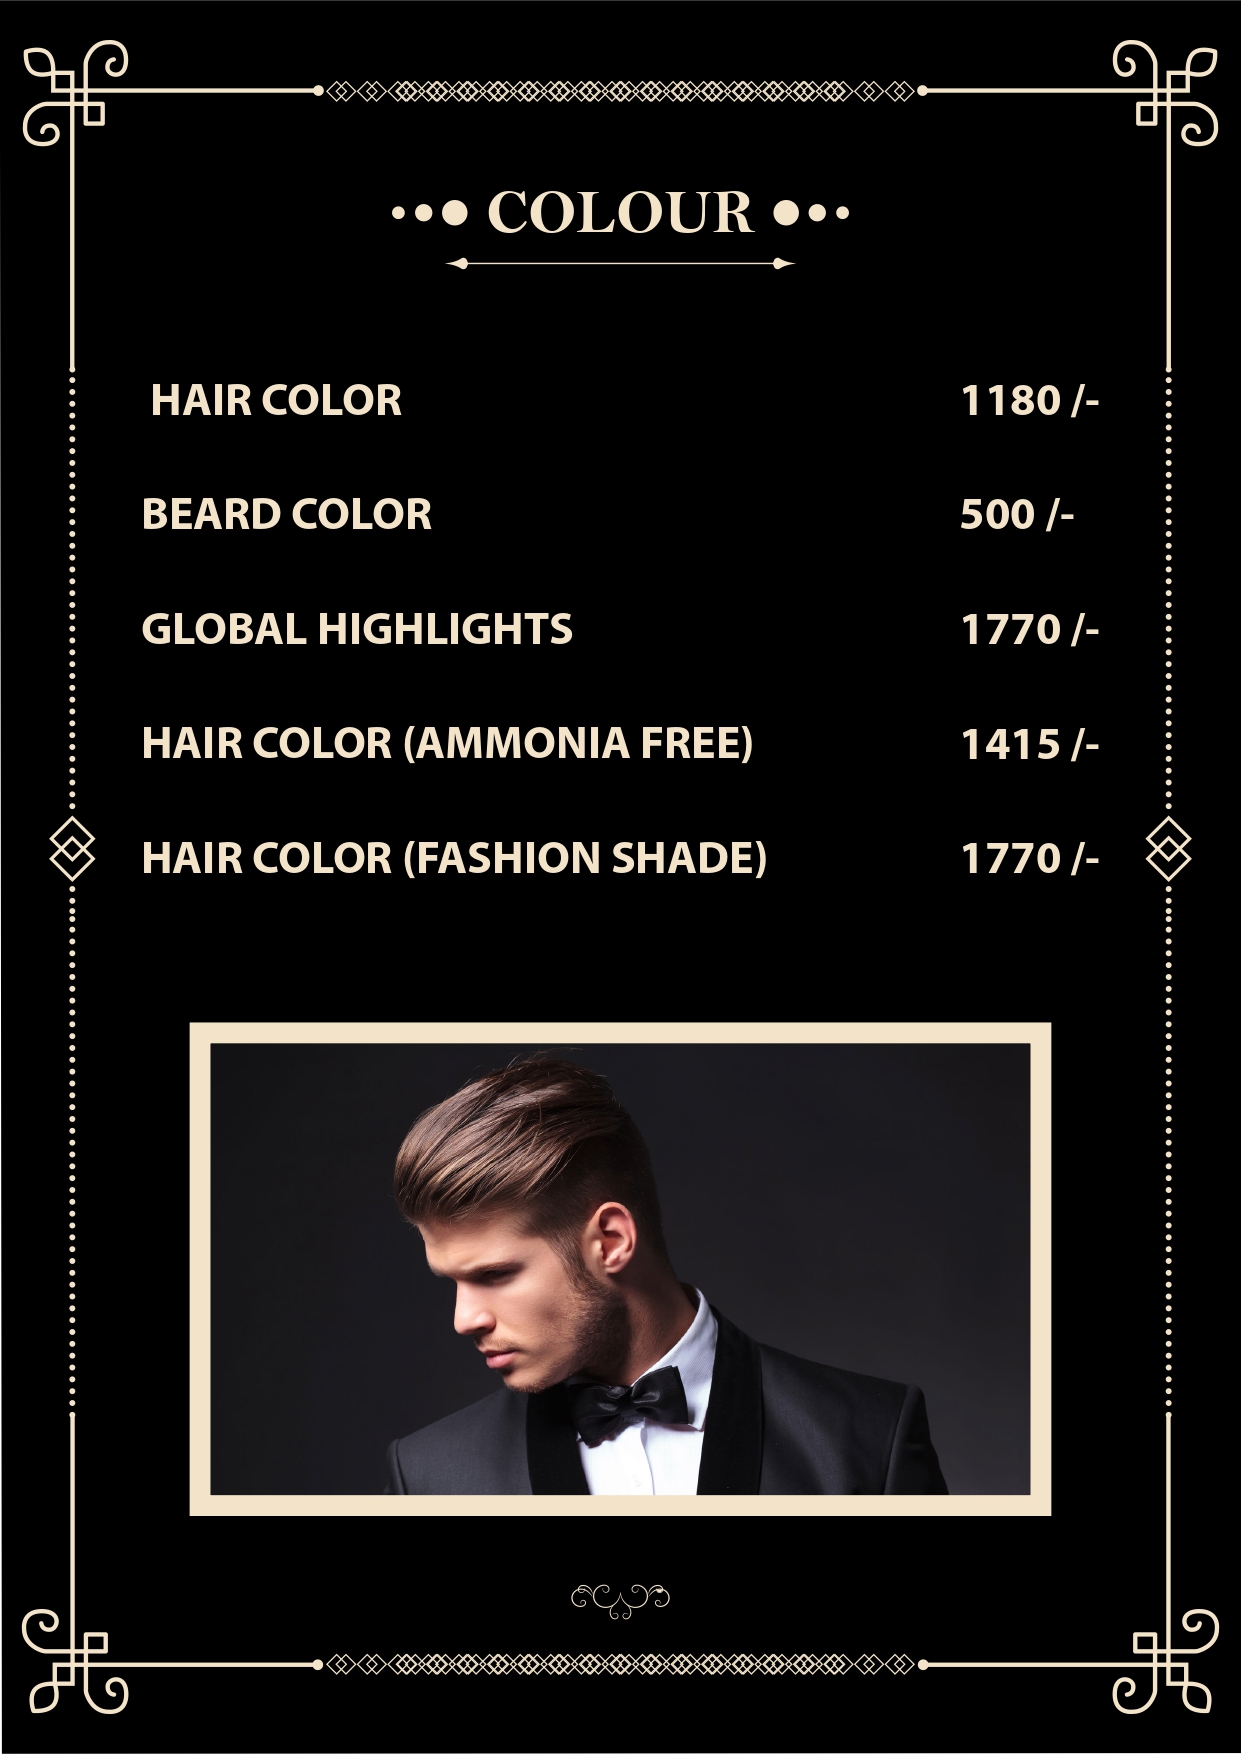 Hair Color Rate Card Jawed Habib Salon Hazratganj